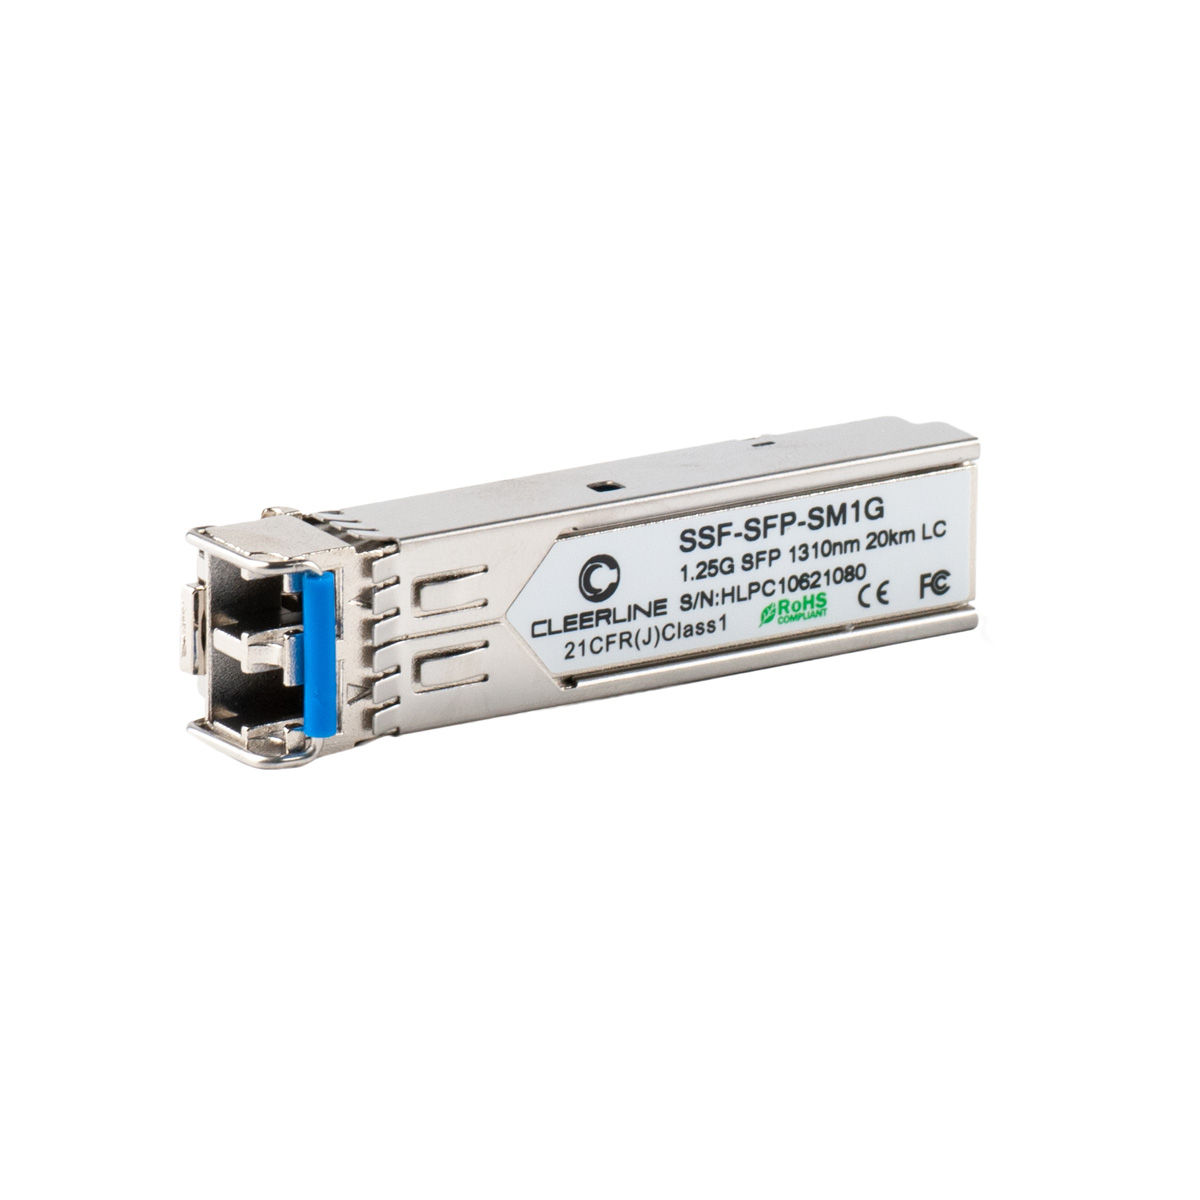 Cleerline Fiber | 1.25G SFP
transceiver SM 1000Base-LX,
1310nm, 20Km max reach, w/DDM